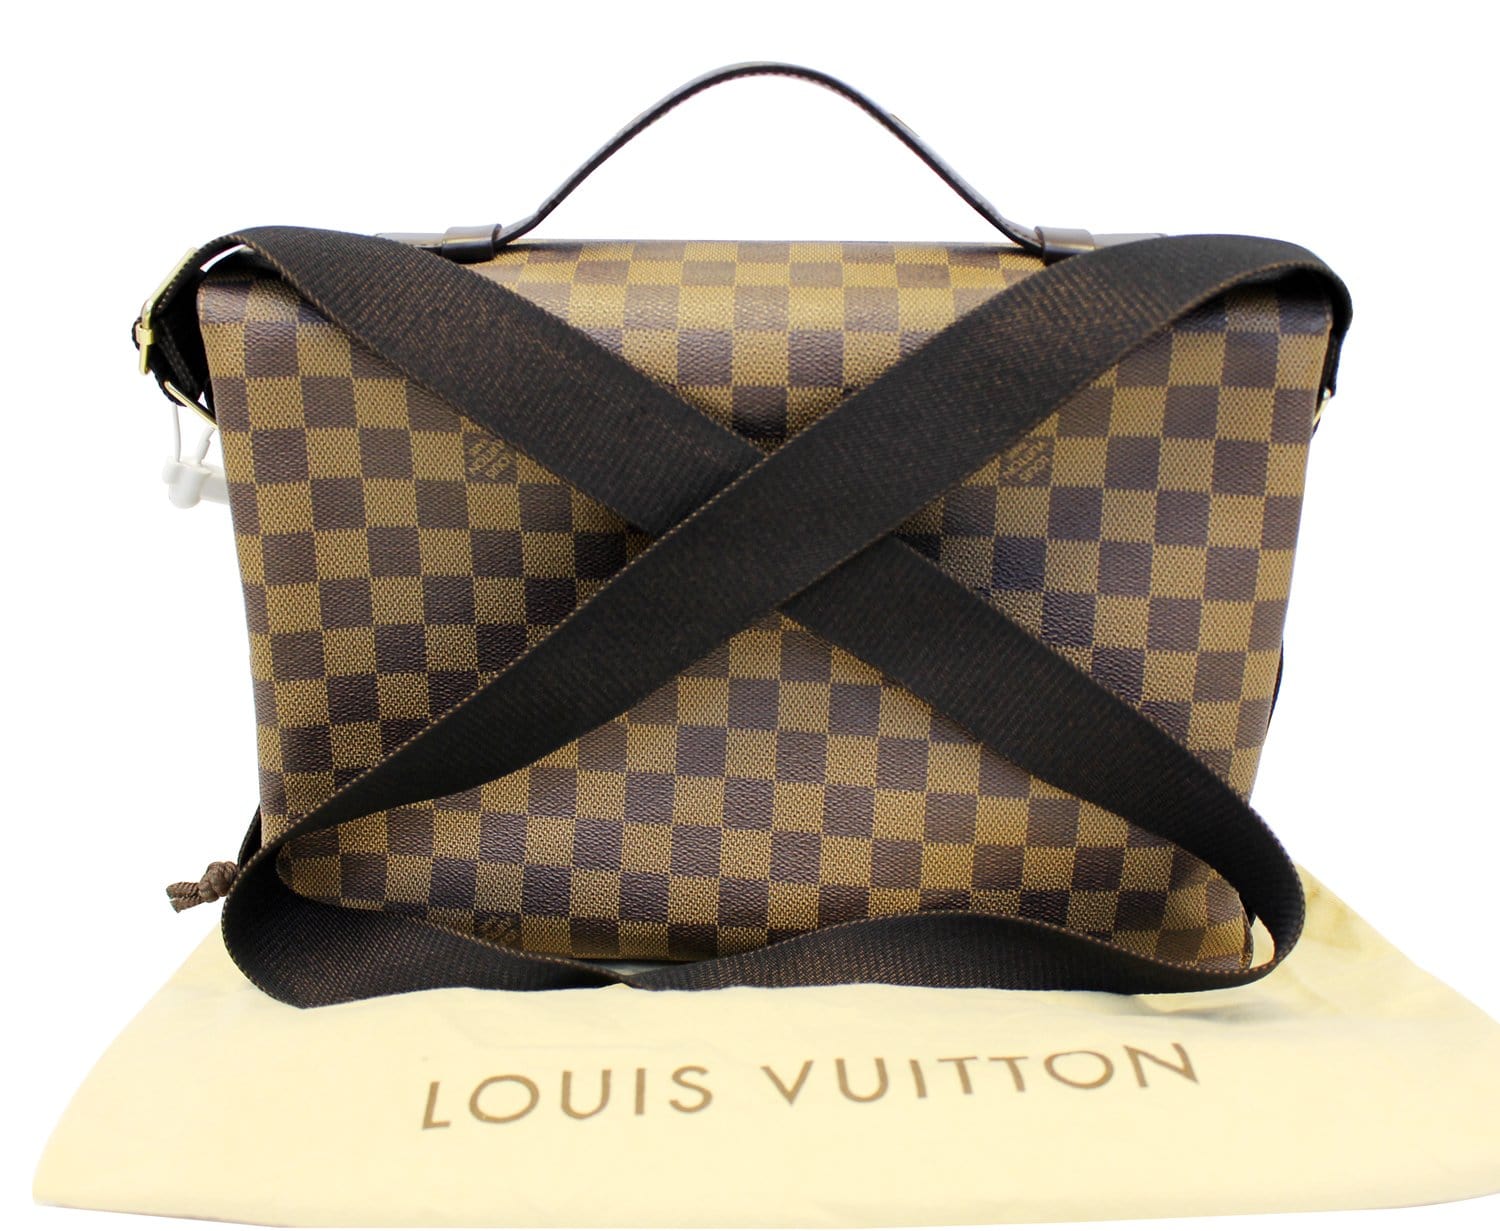 Sold at Auction: Vintage Louis Vuitton Damier Ebene Broadway